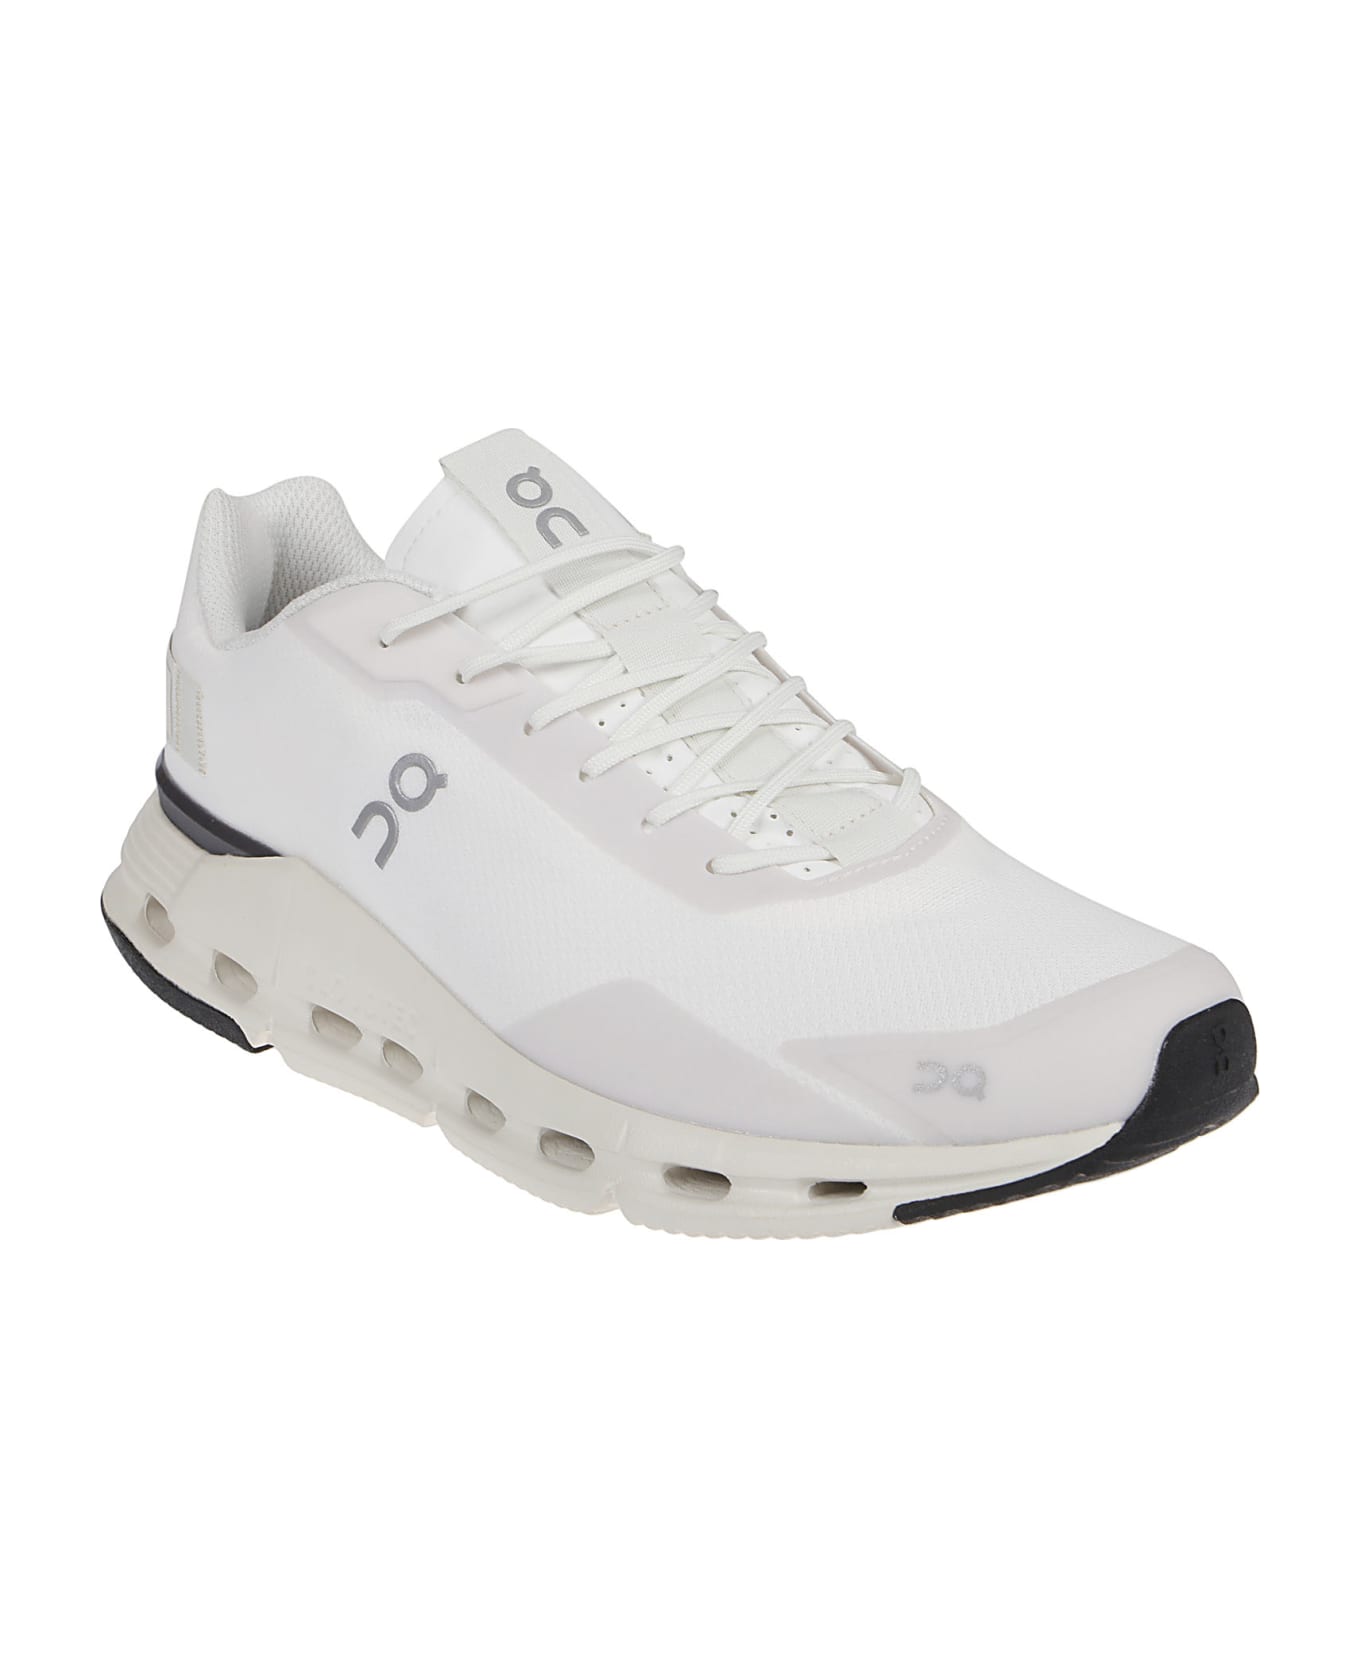 ON Cloudnova Form Sneakers - White